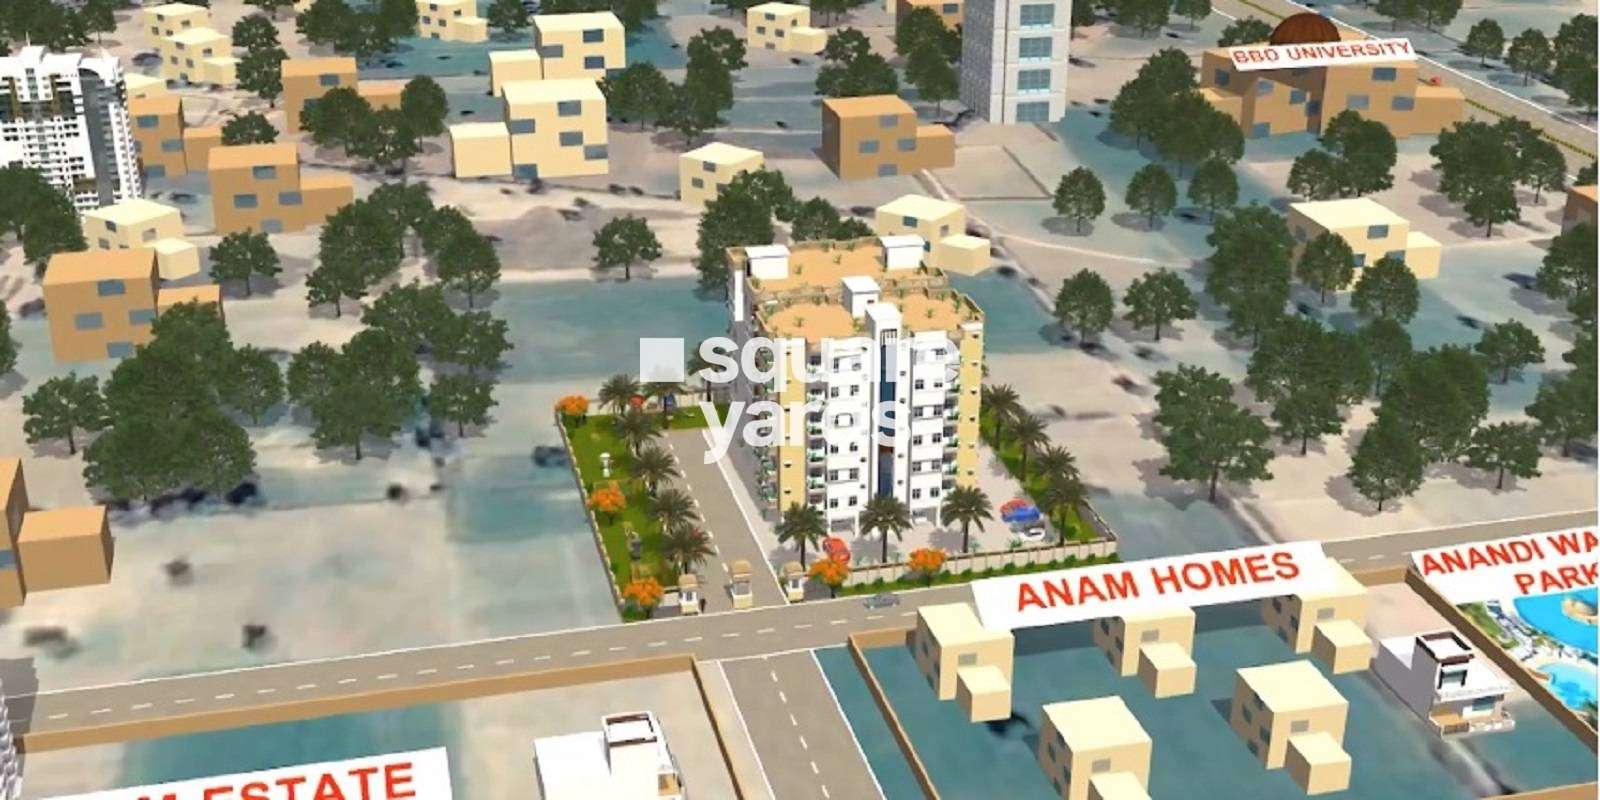 Anam Itnoa Apartments Cover Image